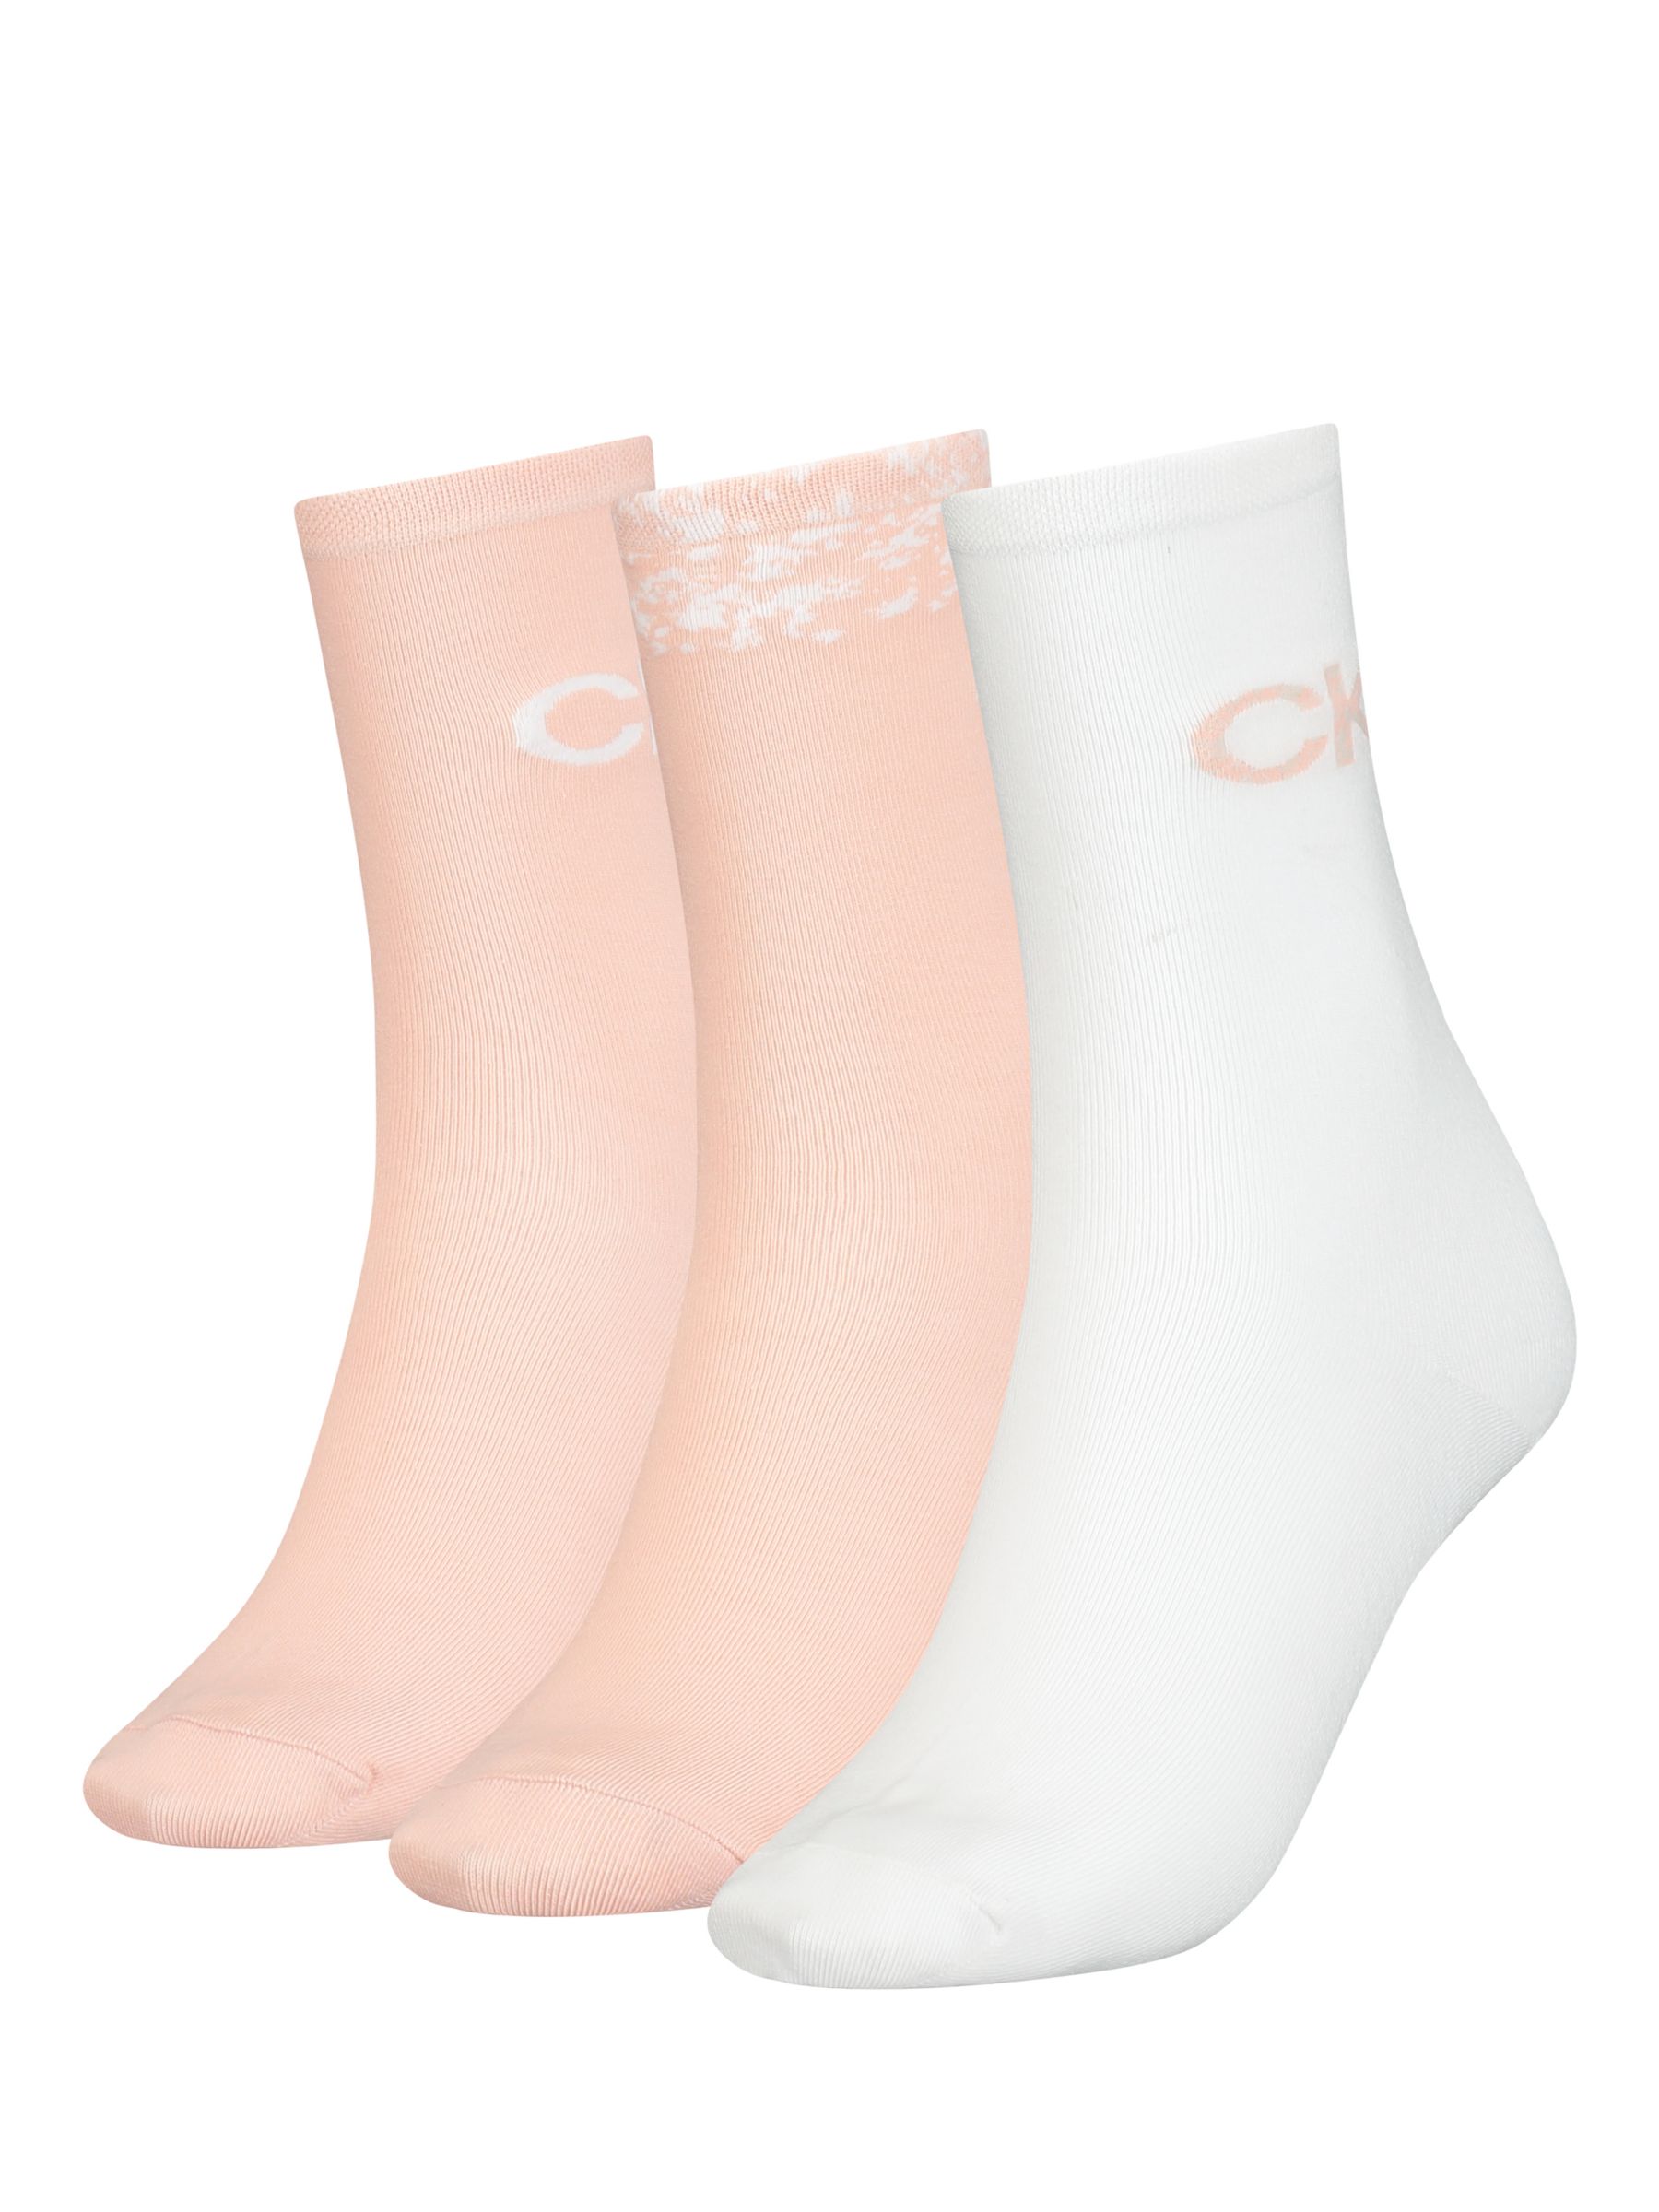 Calvin Klein Crew Socks Gift Set, Pack of 3, Pink Combo